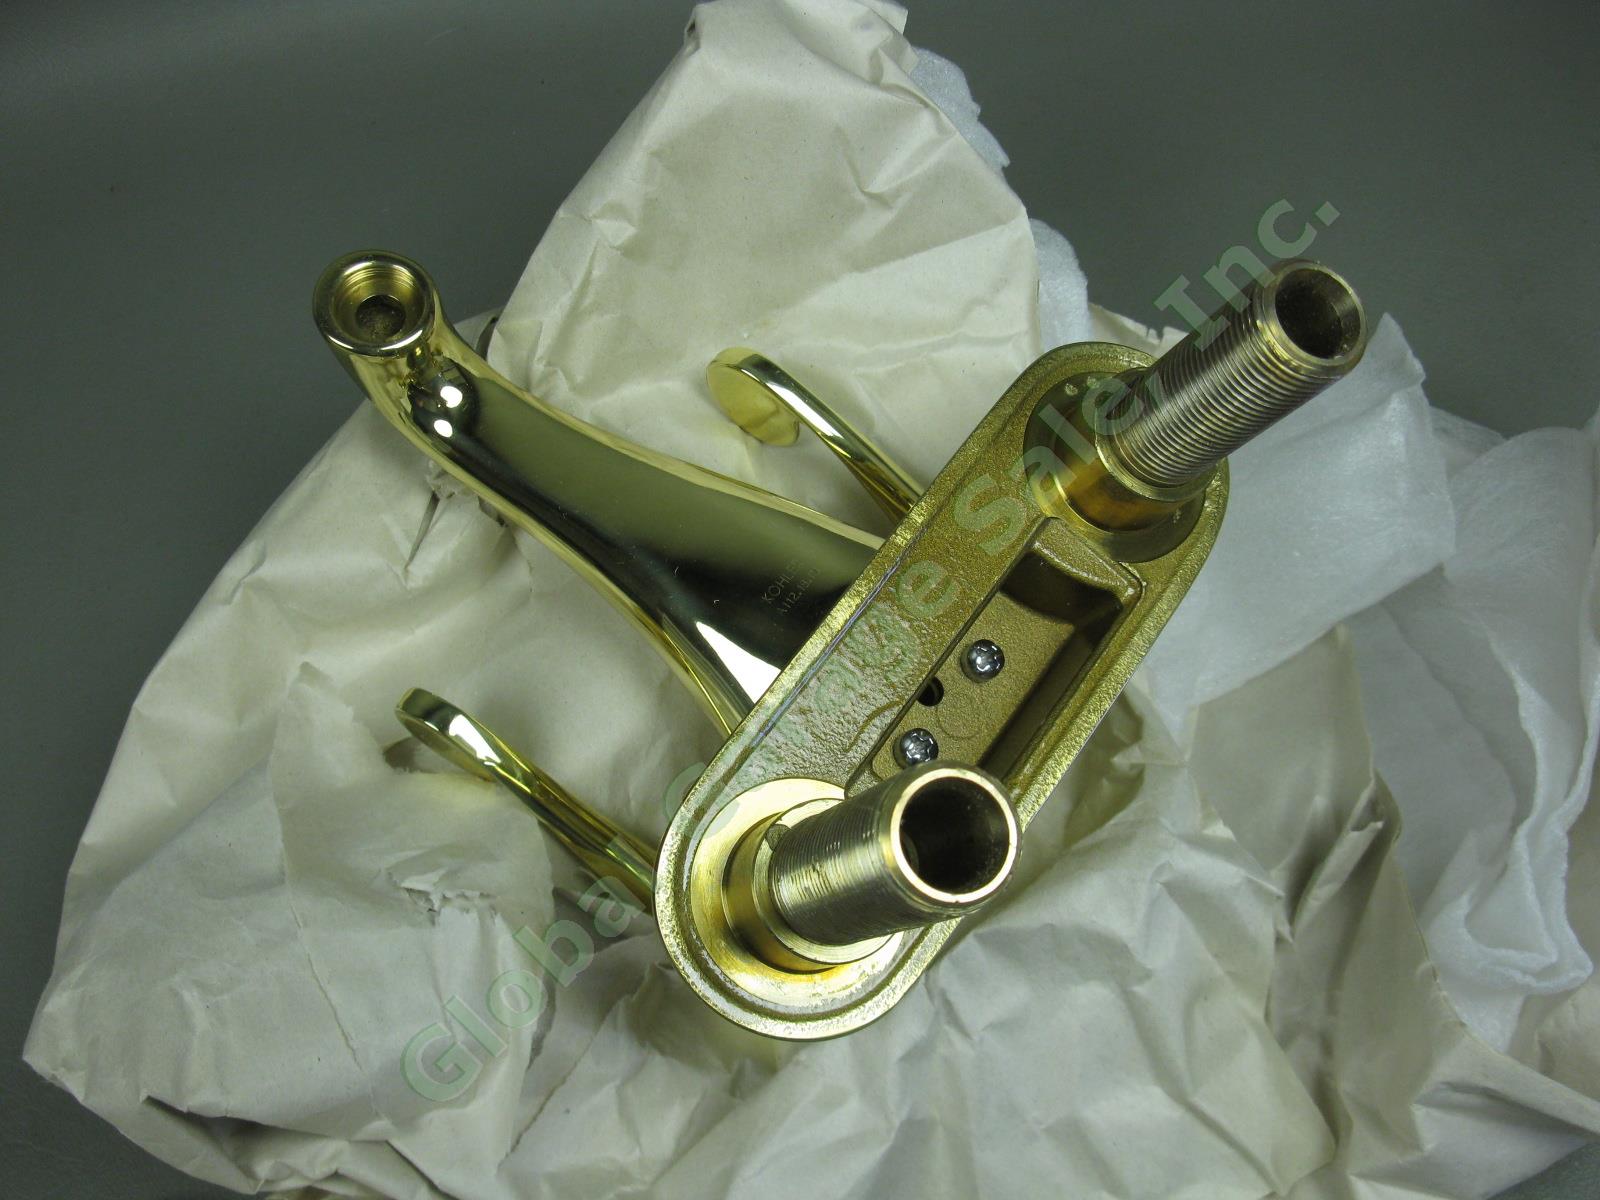 New Kohler 16100-4-PB Revival Centerset Lavatory Bathroom Faucet Polished Brass 3